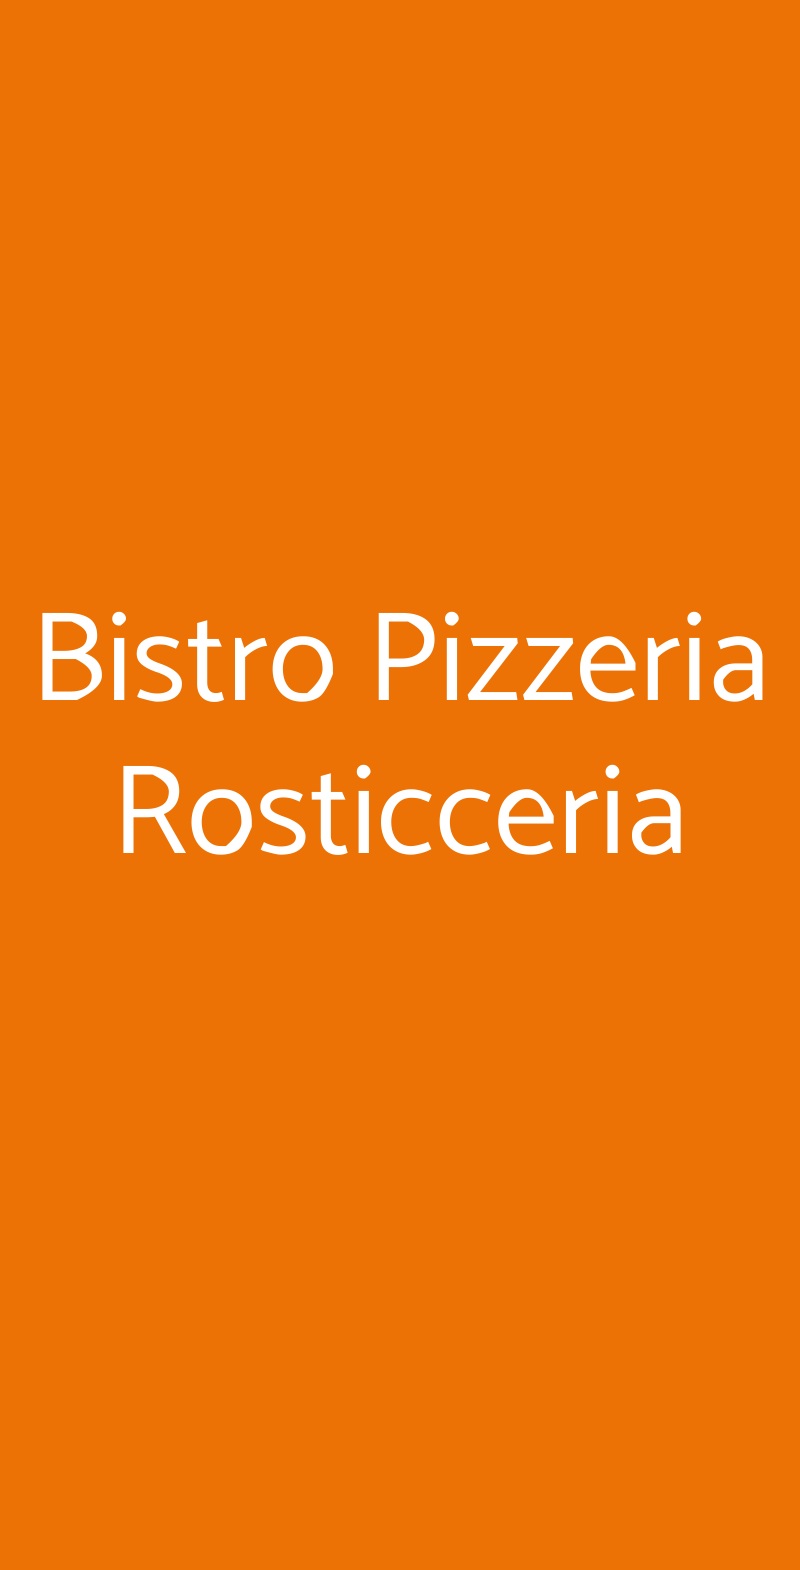 Bistro Pizzeria Rosticceria Bari menù 1 pagina